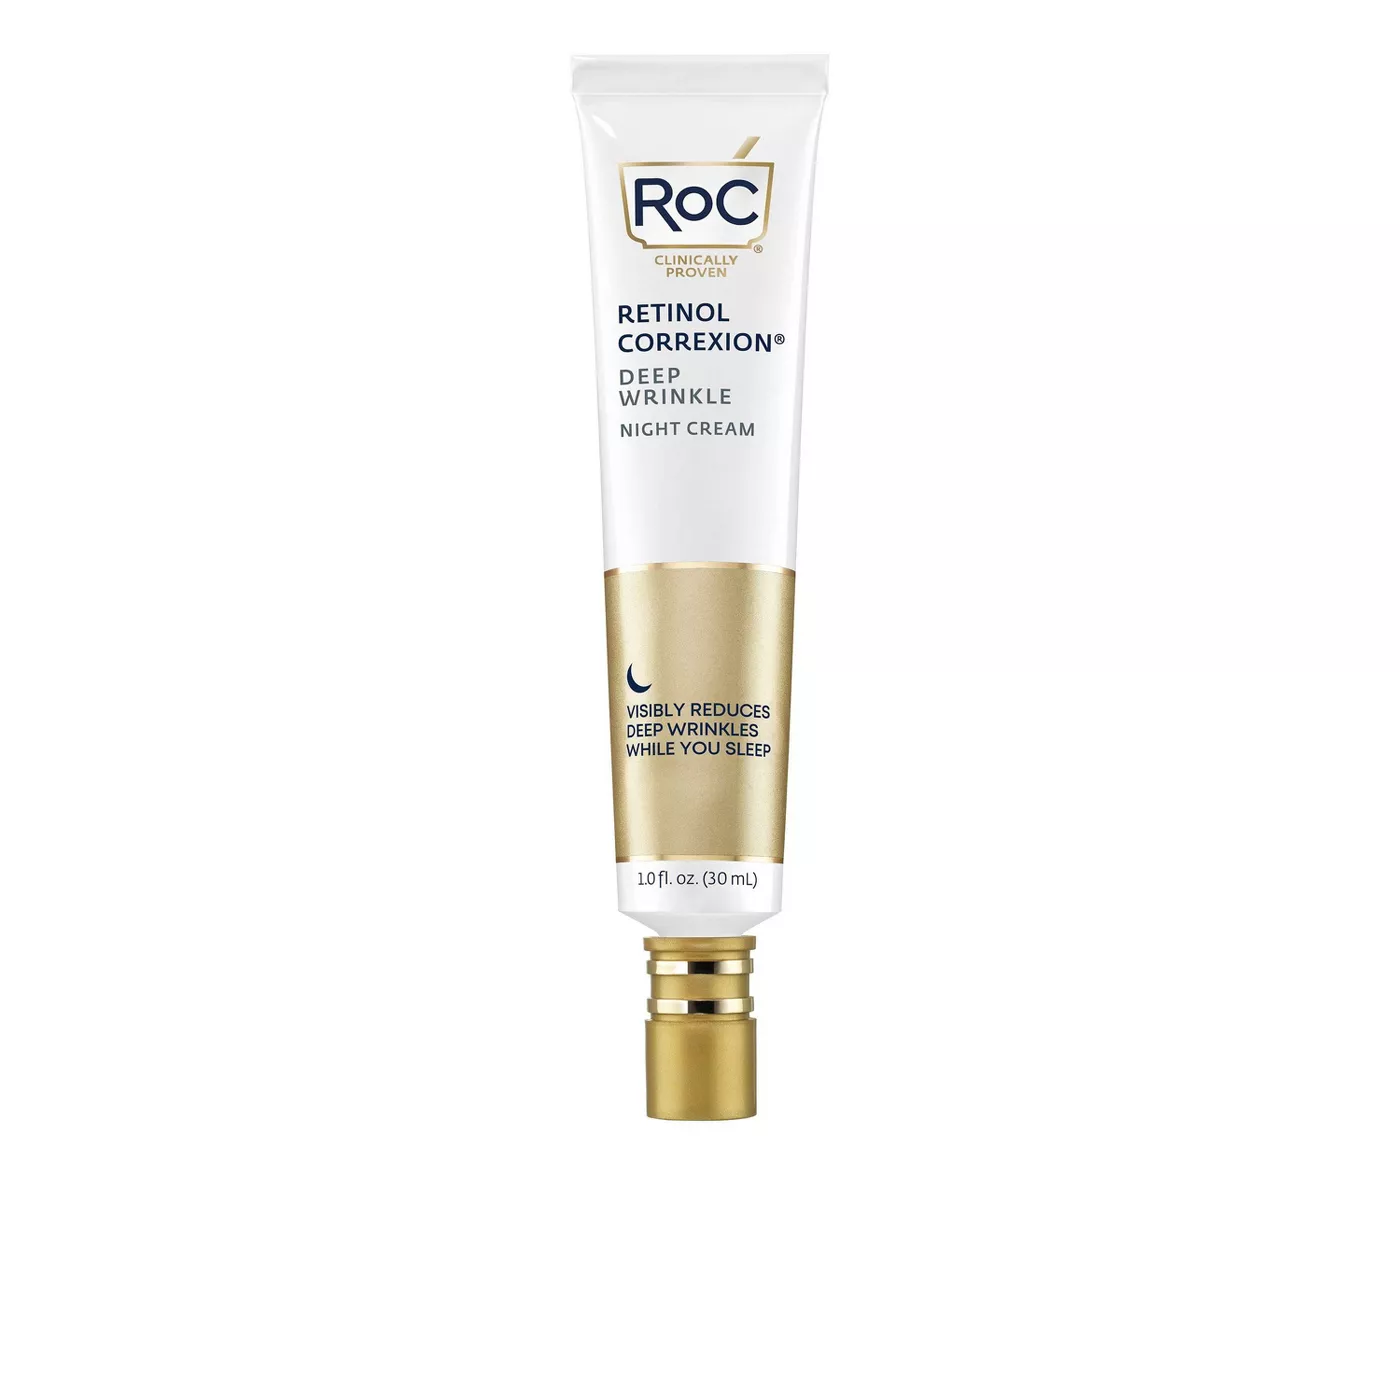  RoC Retinol Correxion Deep Wrinkle Anti-Aging Night Face Cream - 1oz